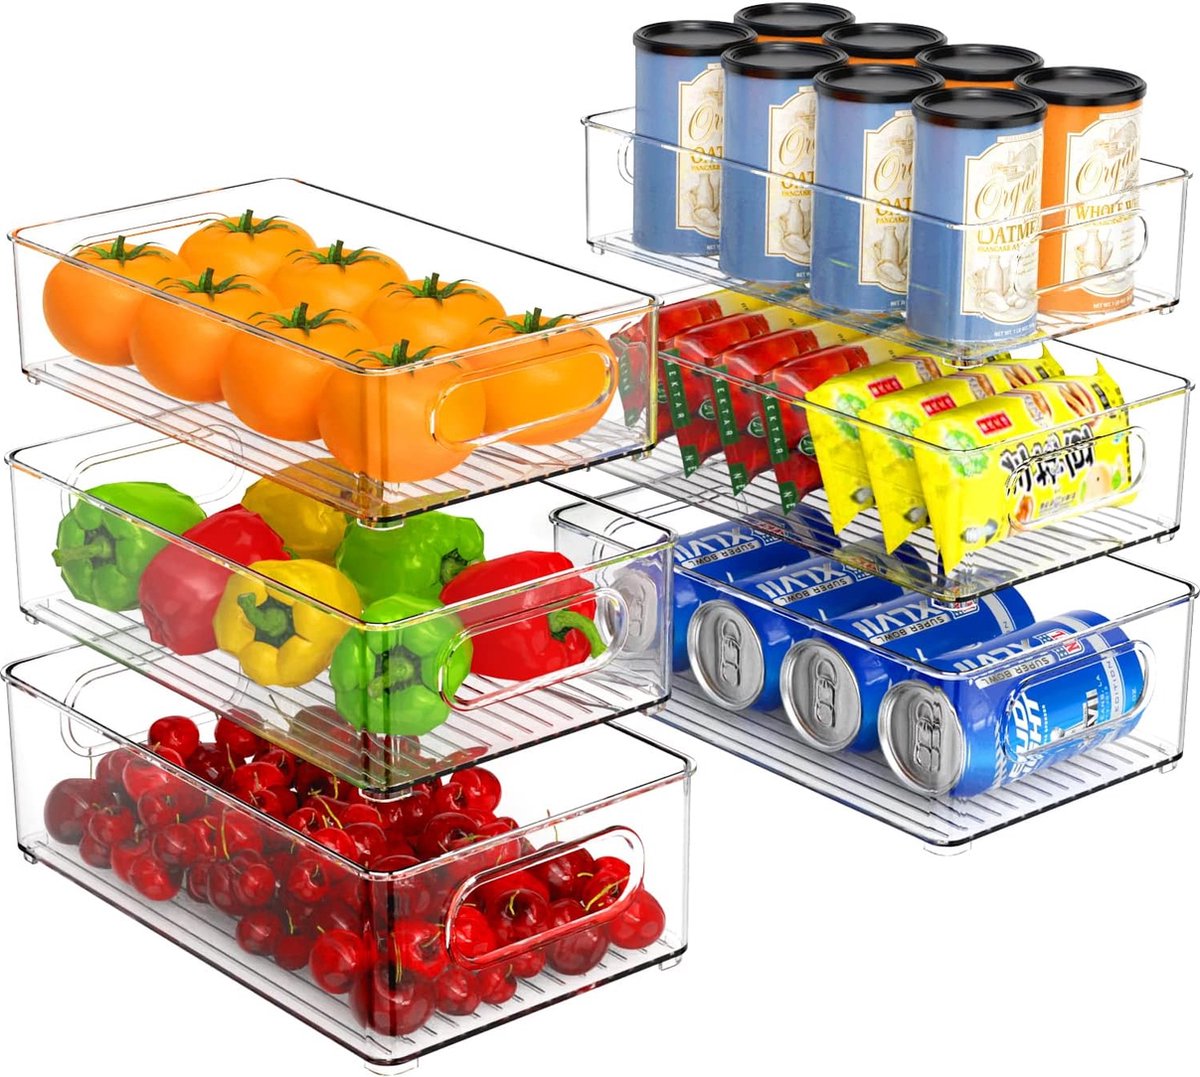 Koelkastorganizer set van 6 keukenorganizer lade keuken opslag en organisatie organizer koelkastorganizer voor badkamer eetkamer 3 maten BPA-vrij